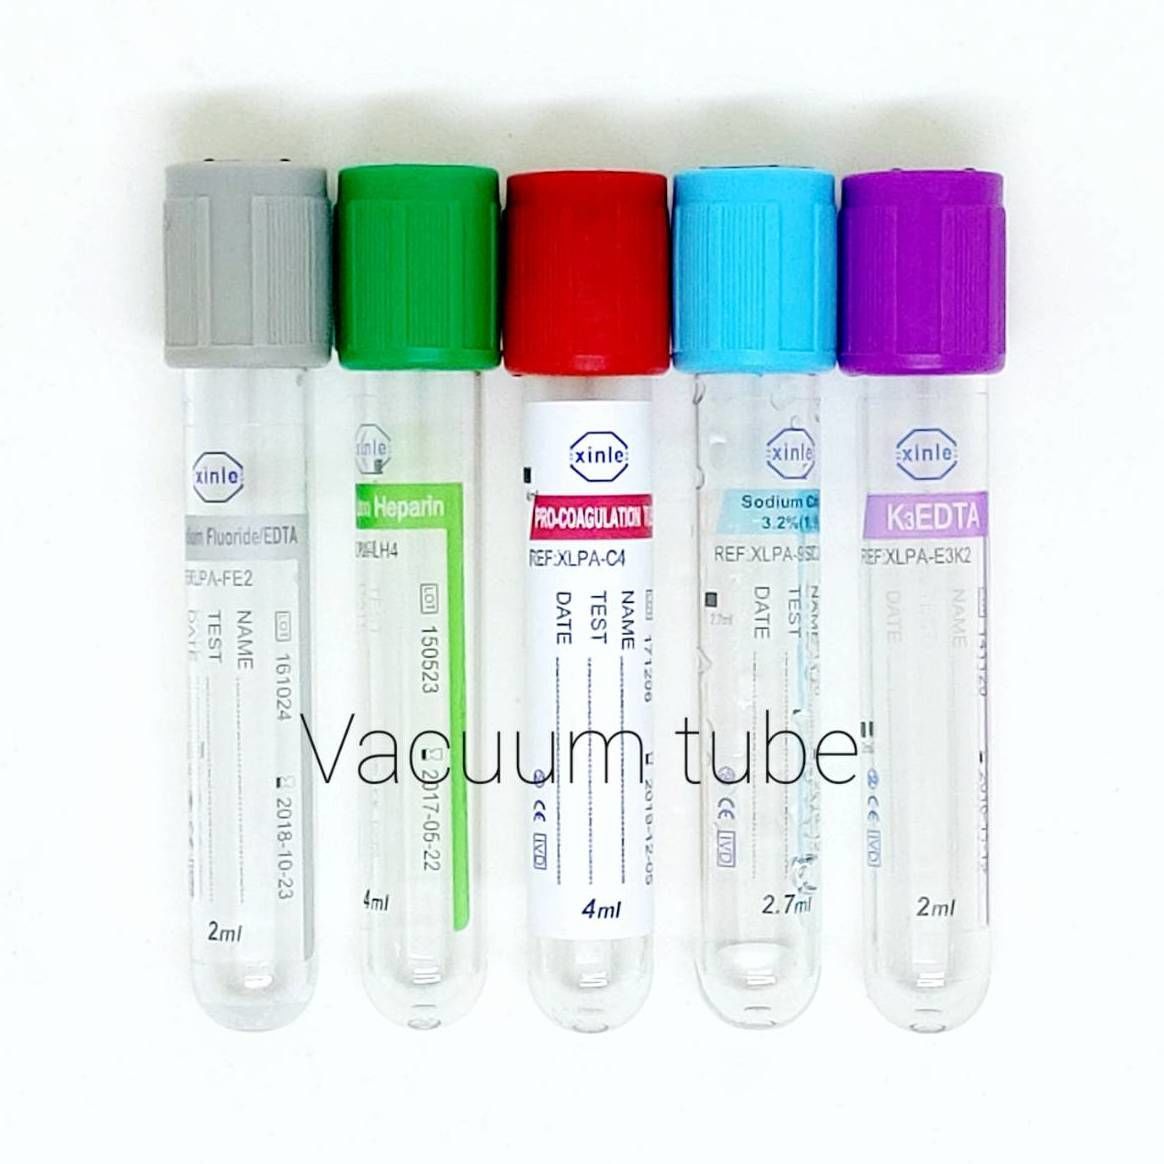 Vacuum Tube